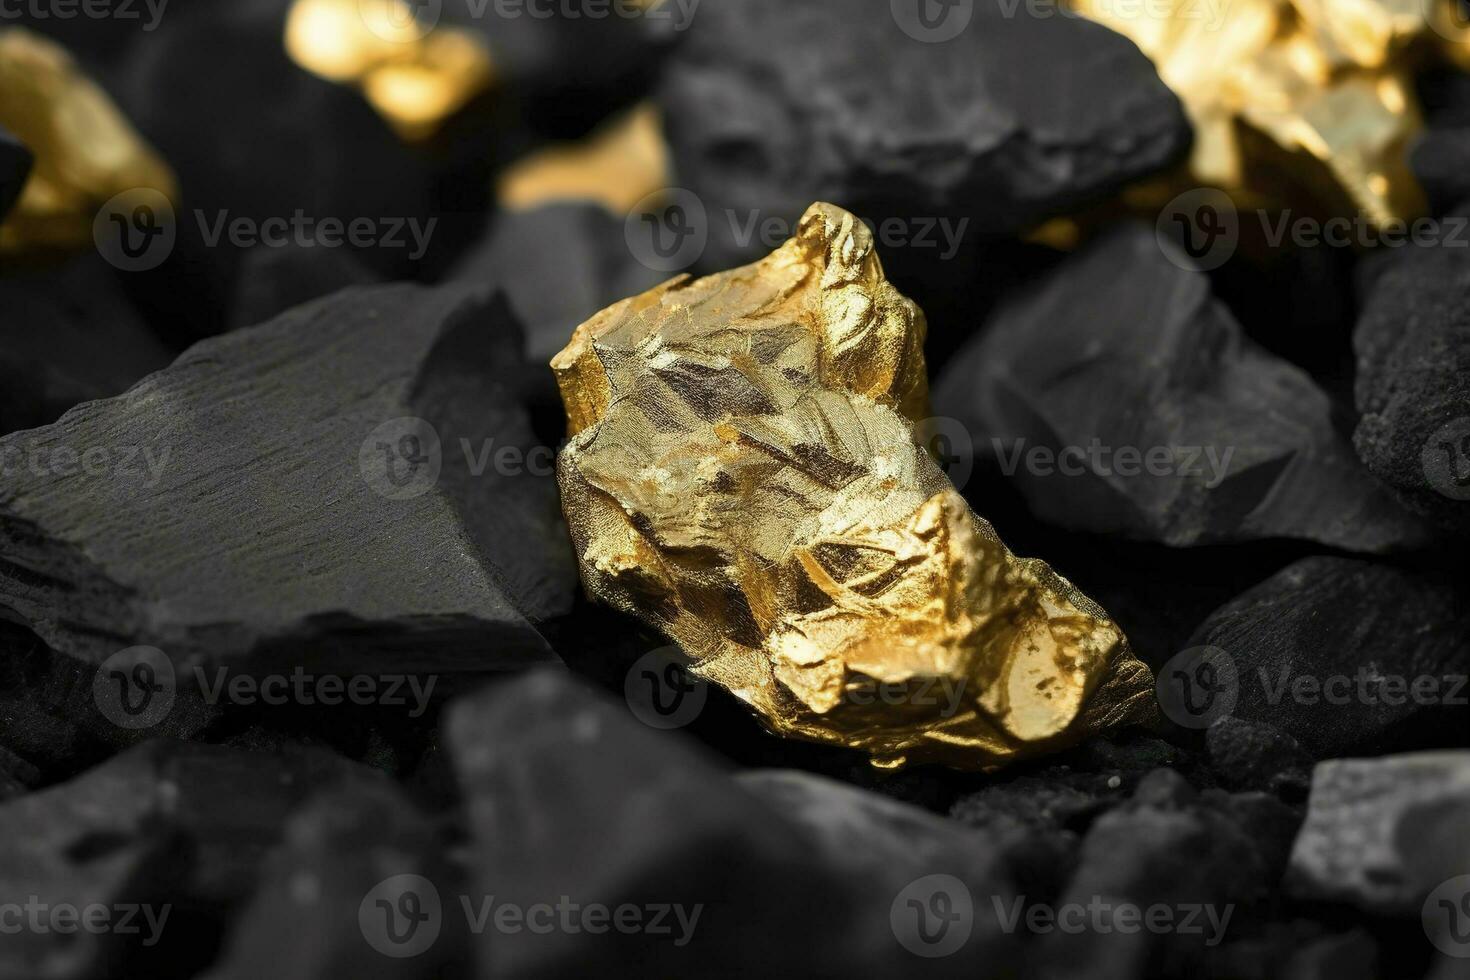 Shiny gold nuggets on coals, closeup view, generate ai photo